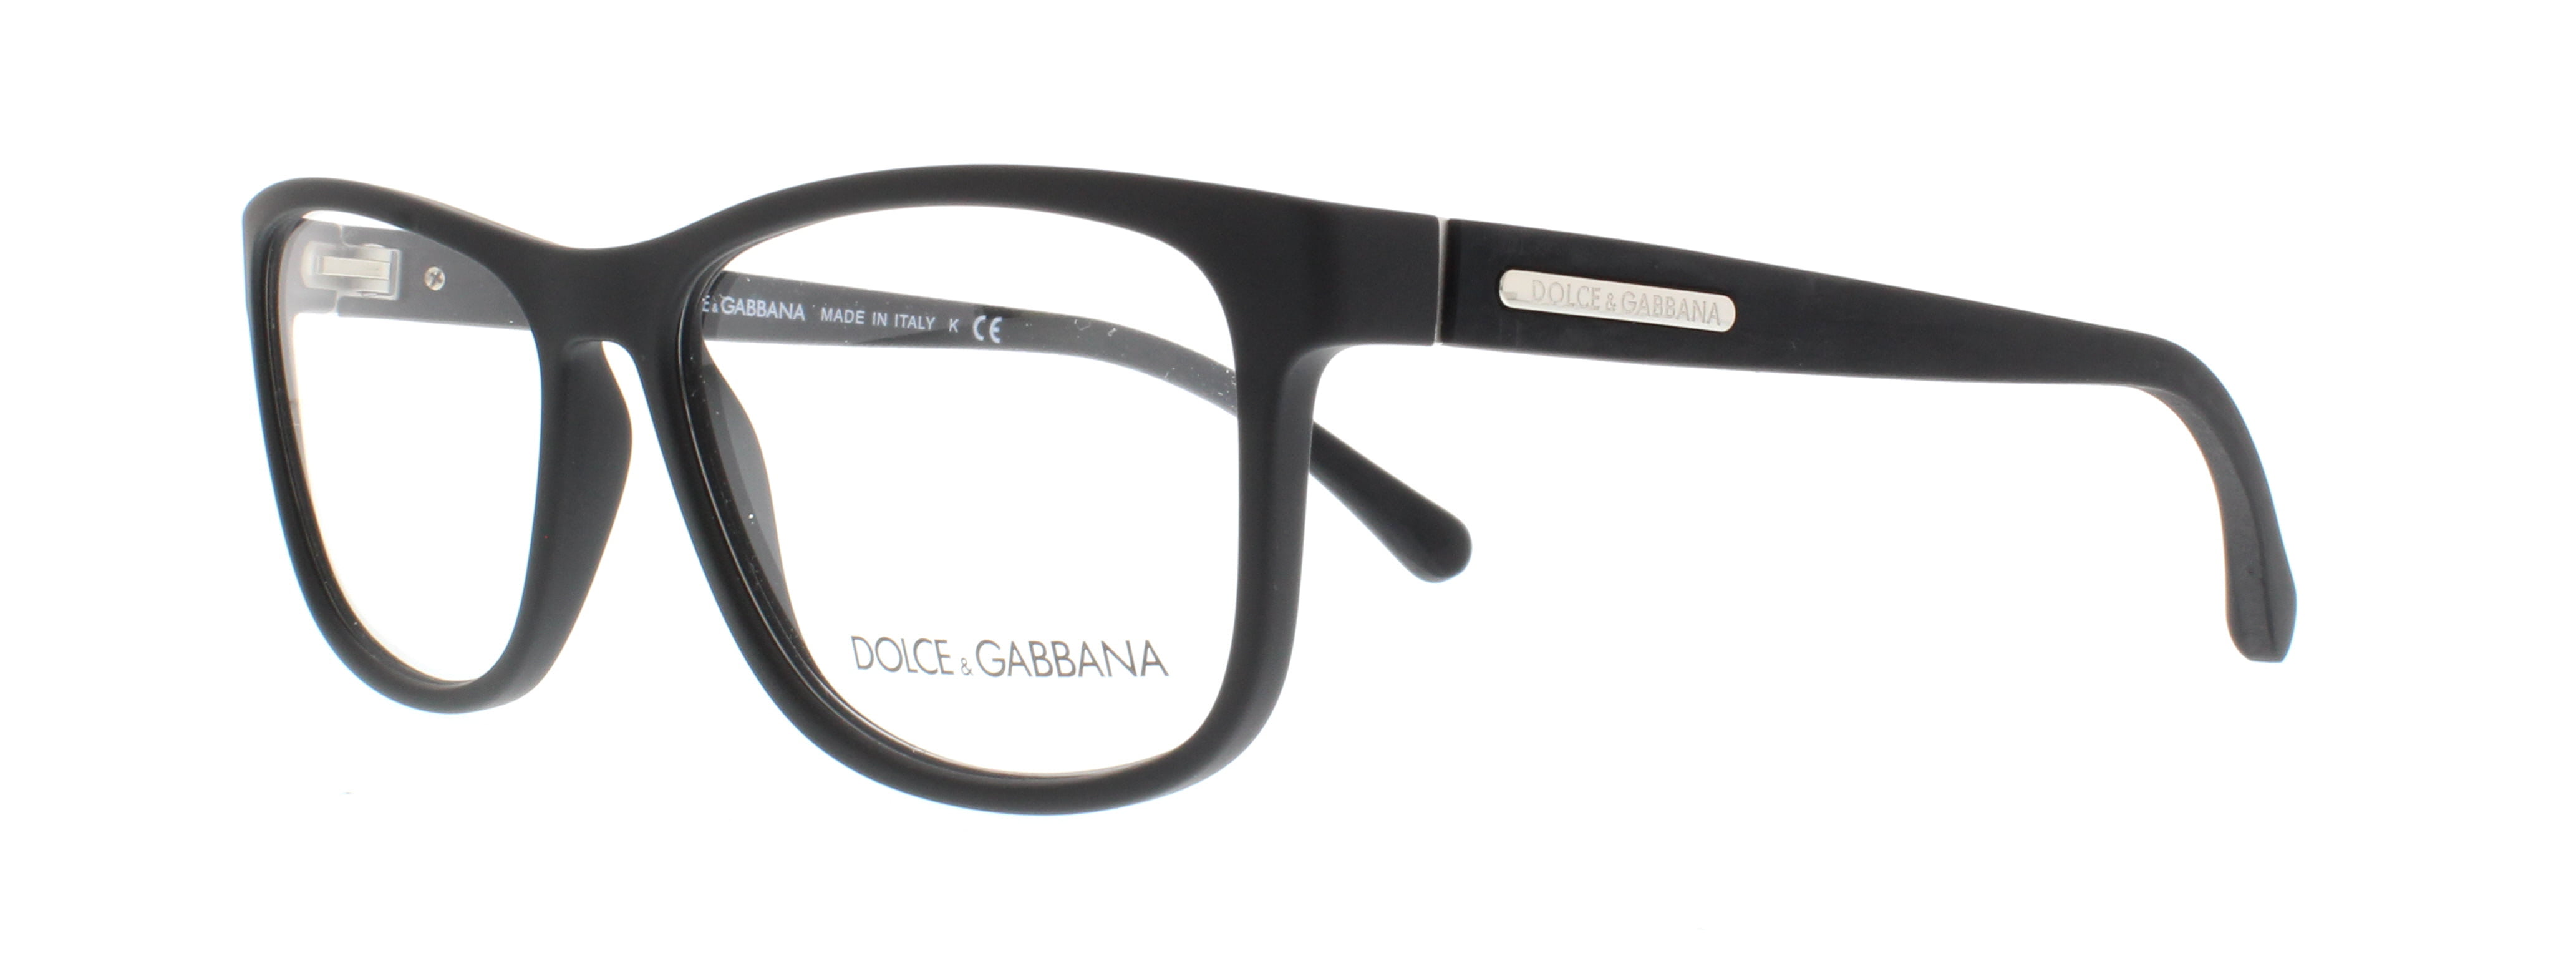 DOLCE & GABBANA Eyeglasses DG 5003 2616 Black 54MM - Walmart.com